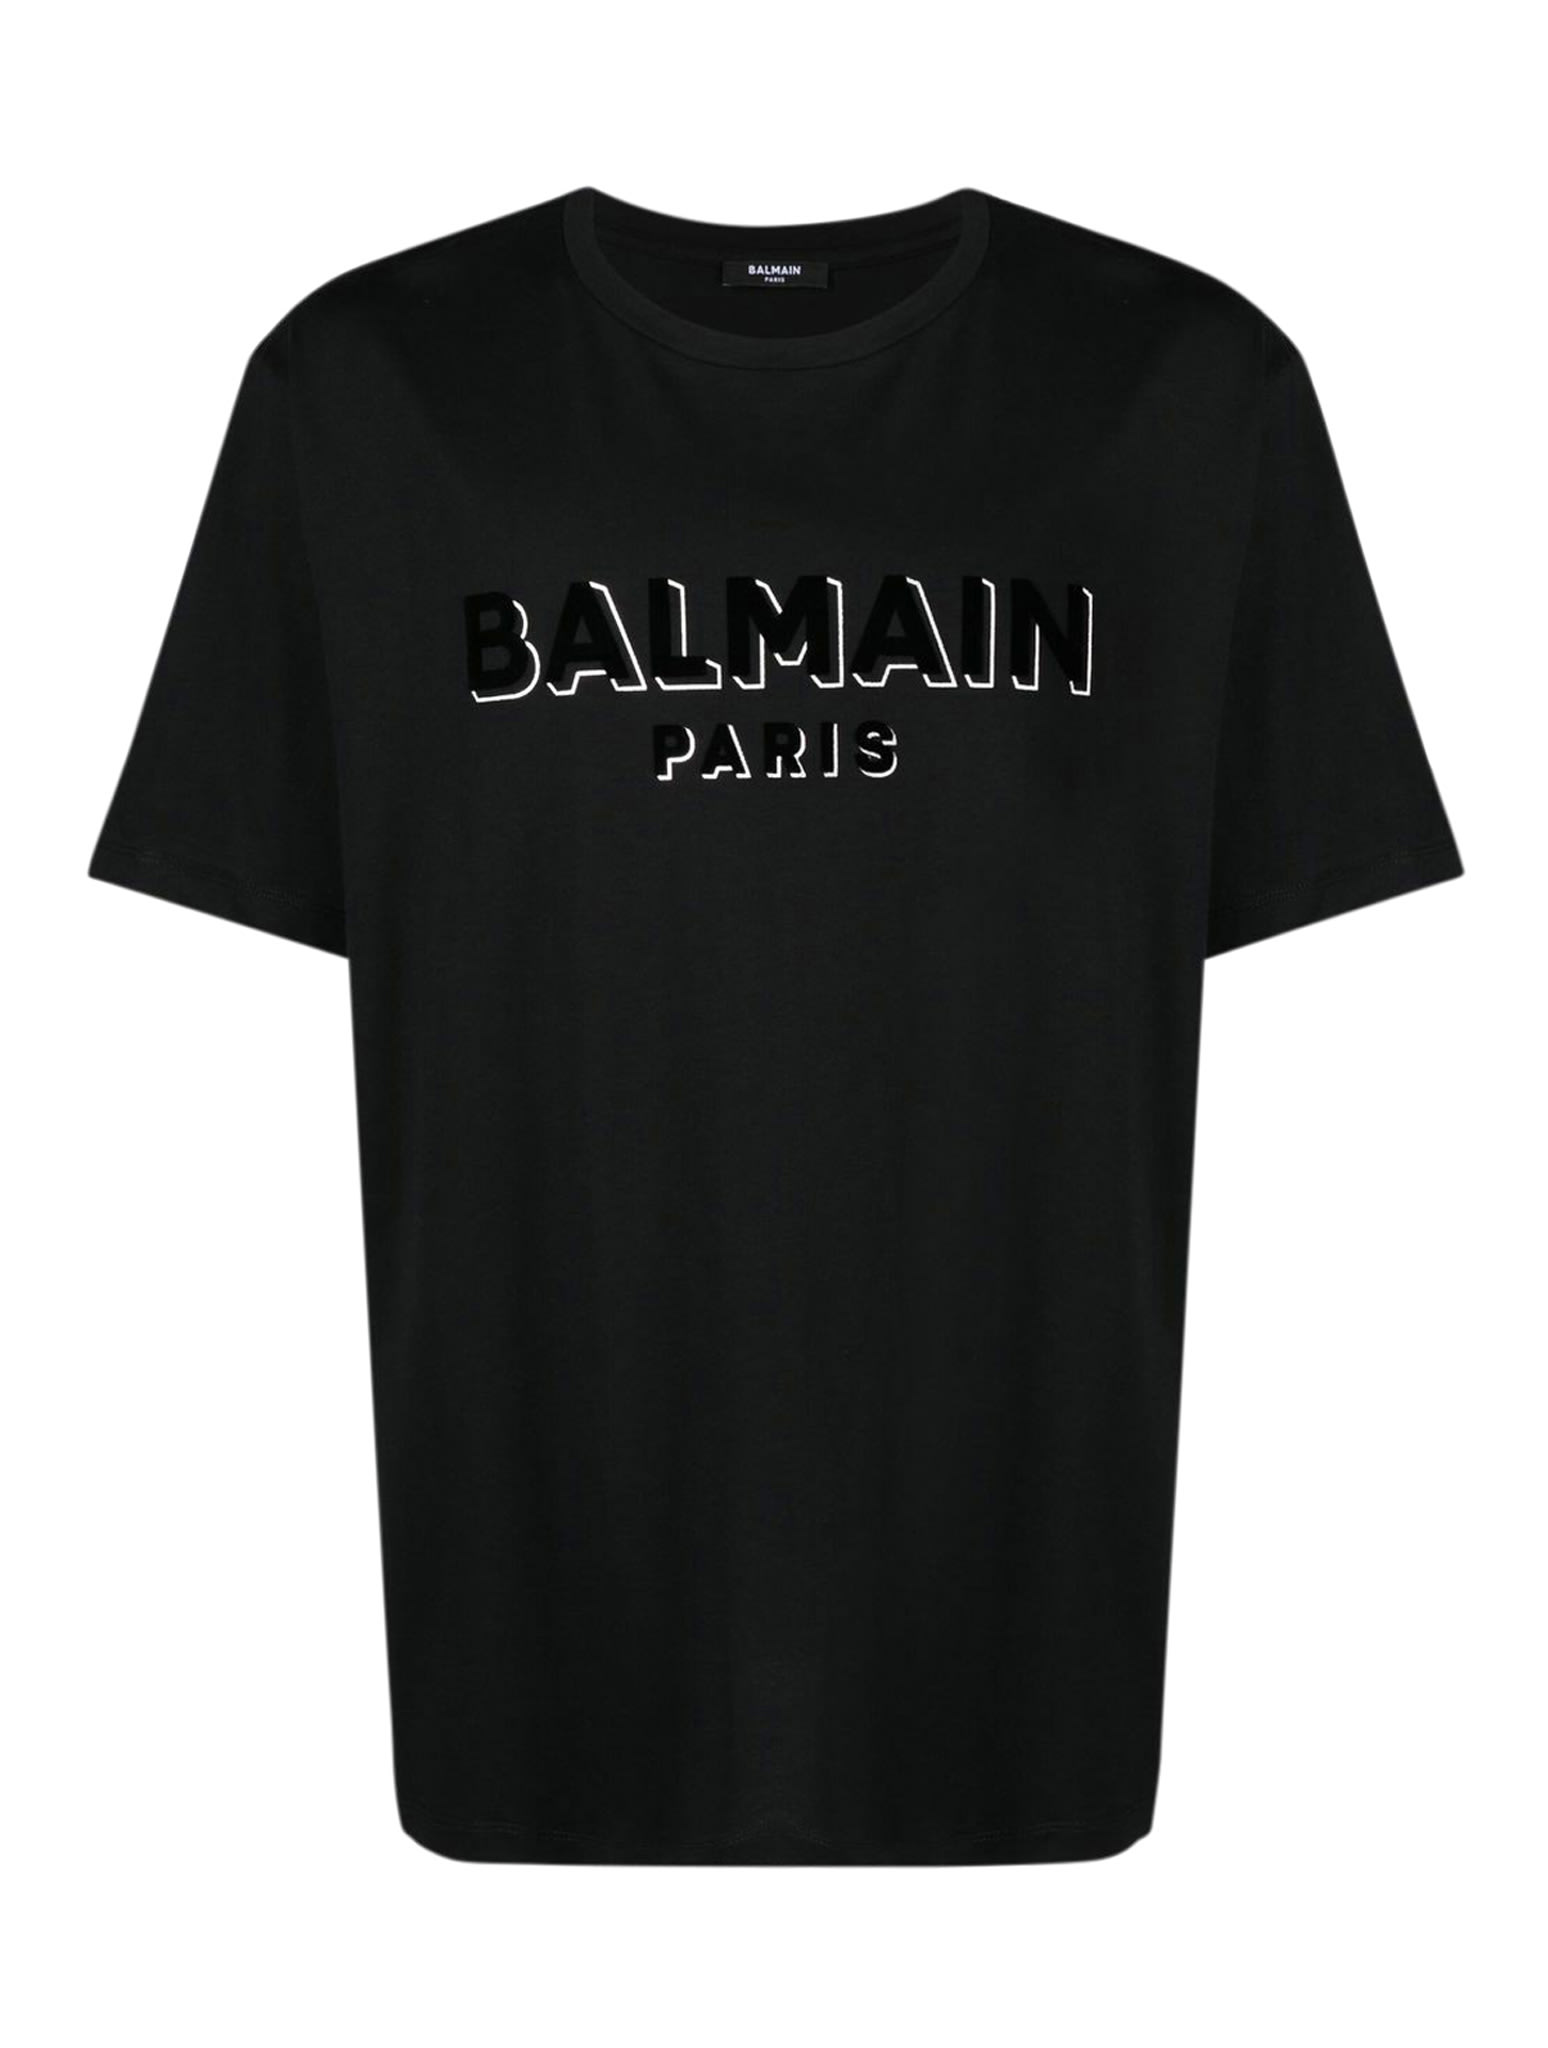 Balmain Flock & Foil T-shirt - Bulky Fit